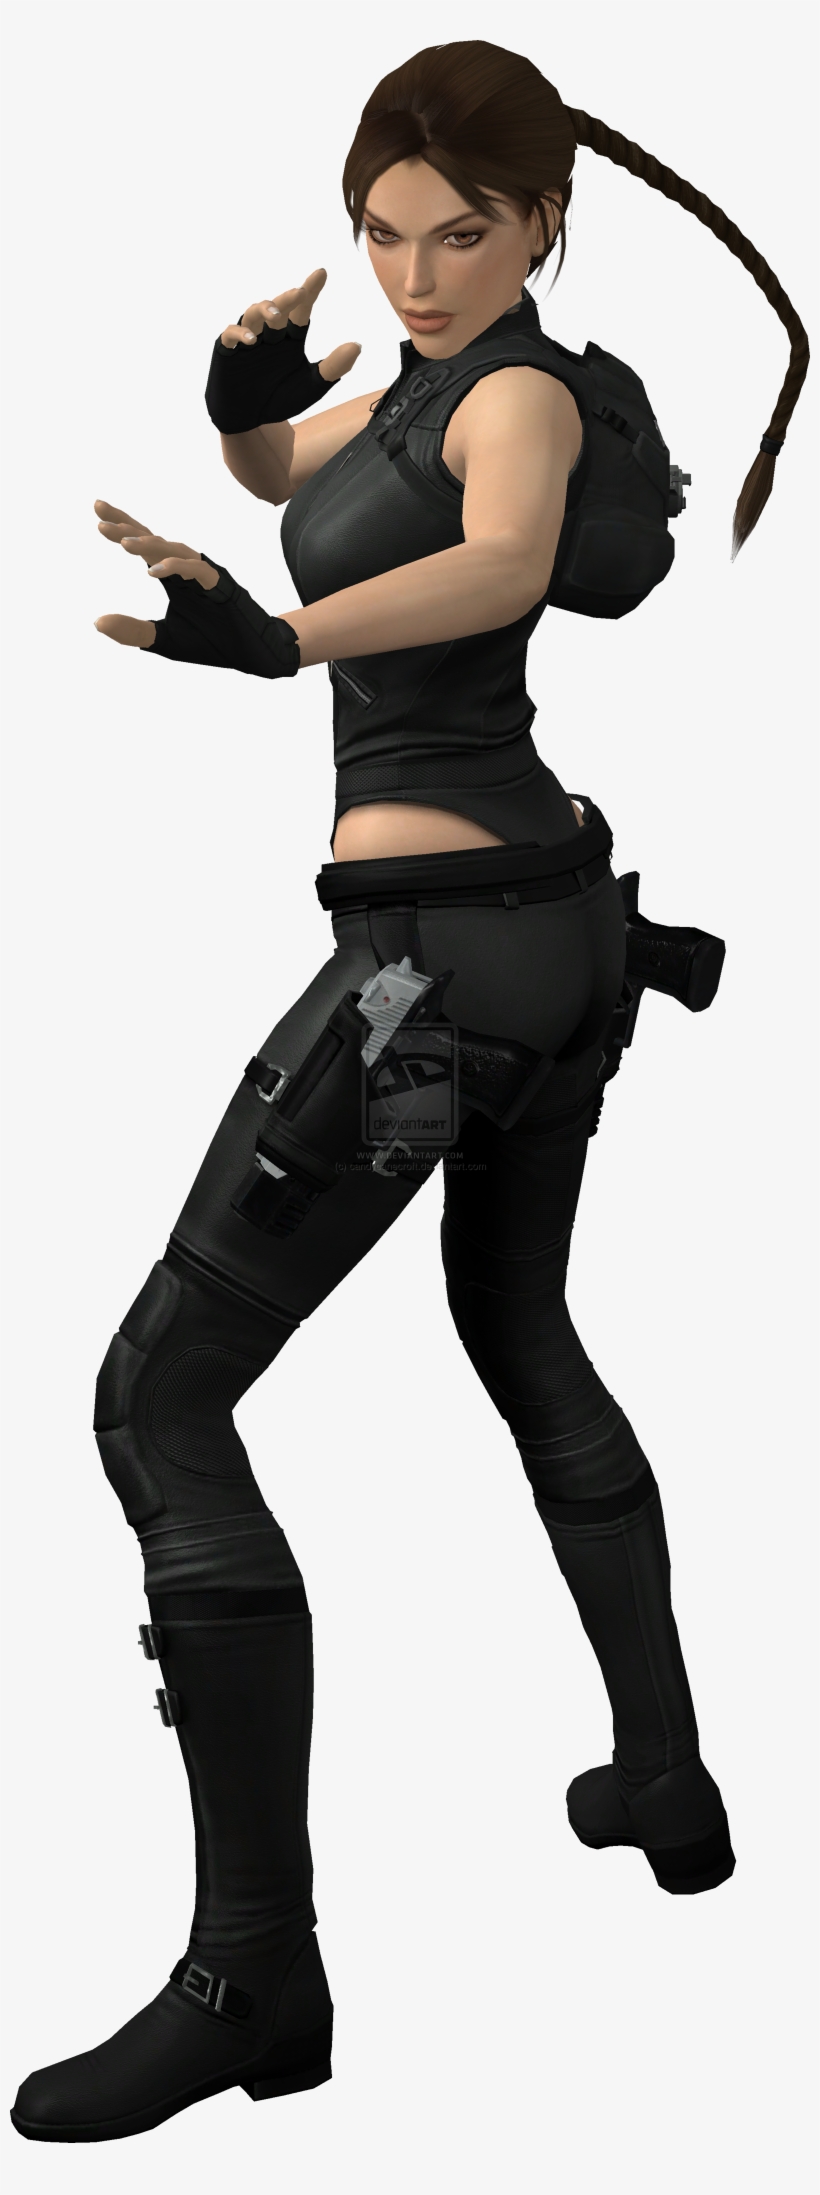 Lara Croft Png Download - Lara Croft Fan Transparent, transparent png #1624863